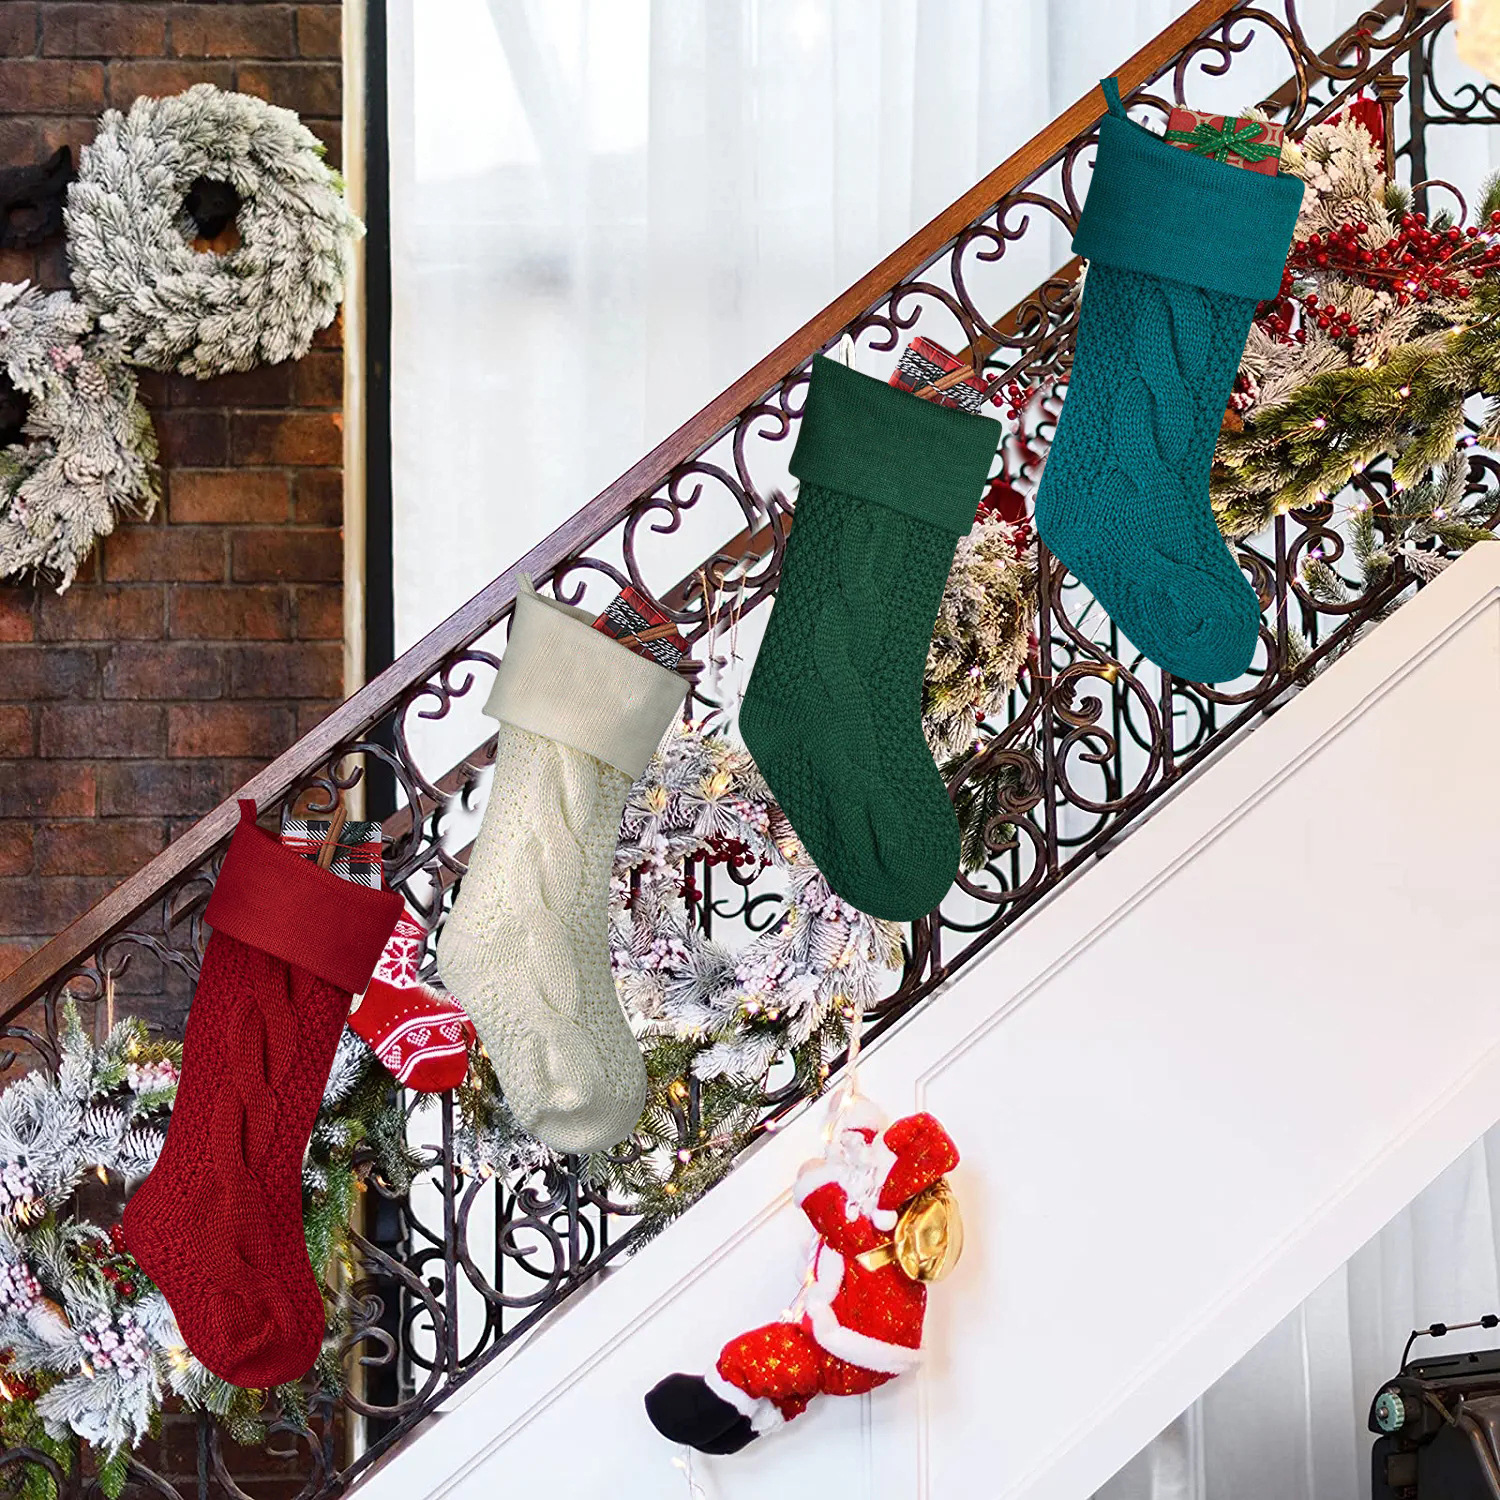 Twist Knit Christmas Stockings - Festive Holiday Decor